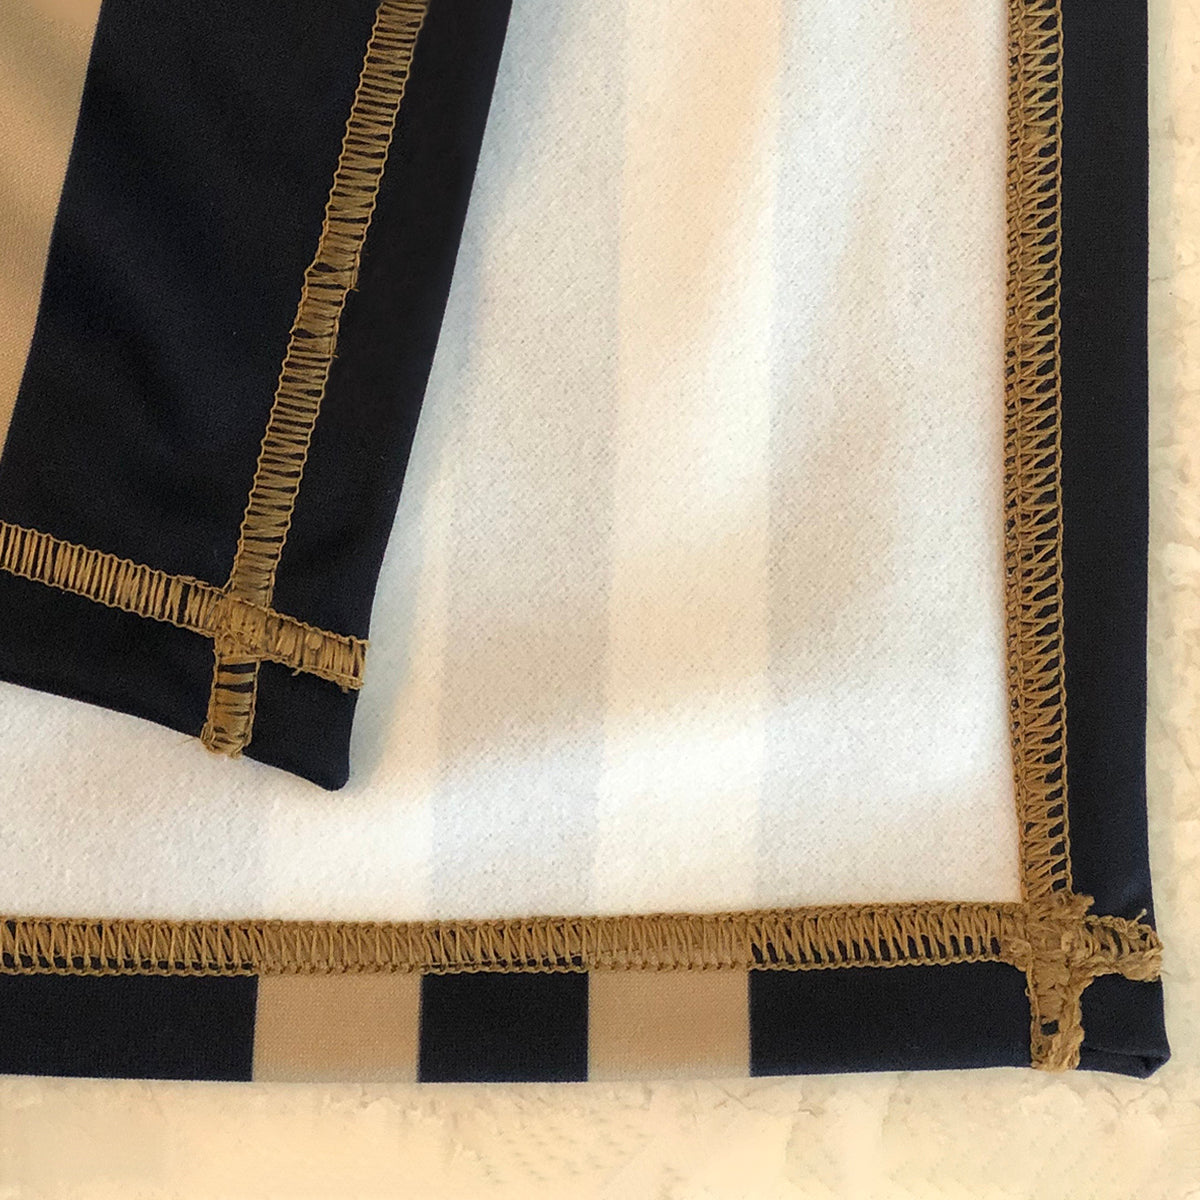 University of Toledo Rockets Game Day Soft Premium Fleece Navy Throw Blanket 40 x 58 Logo and Stripes